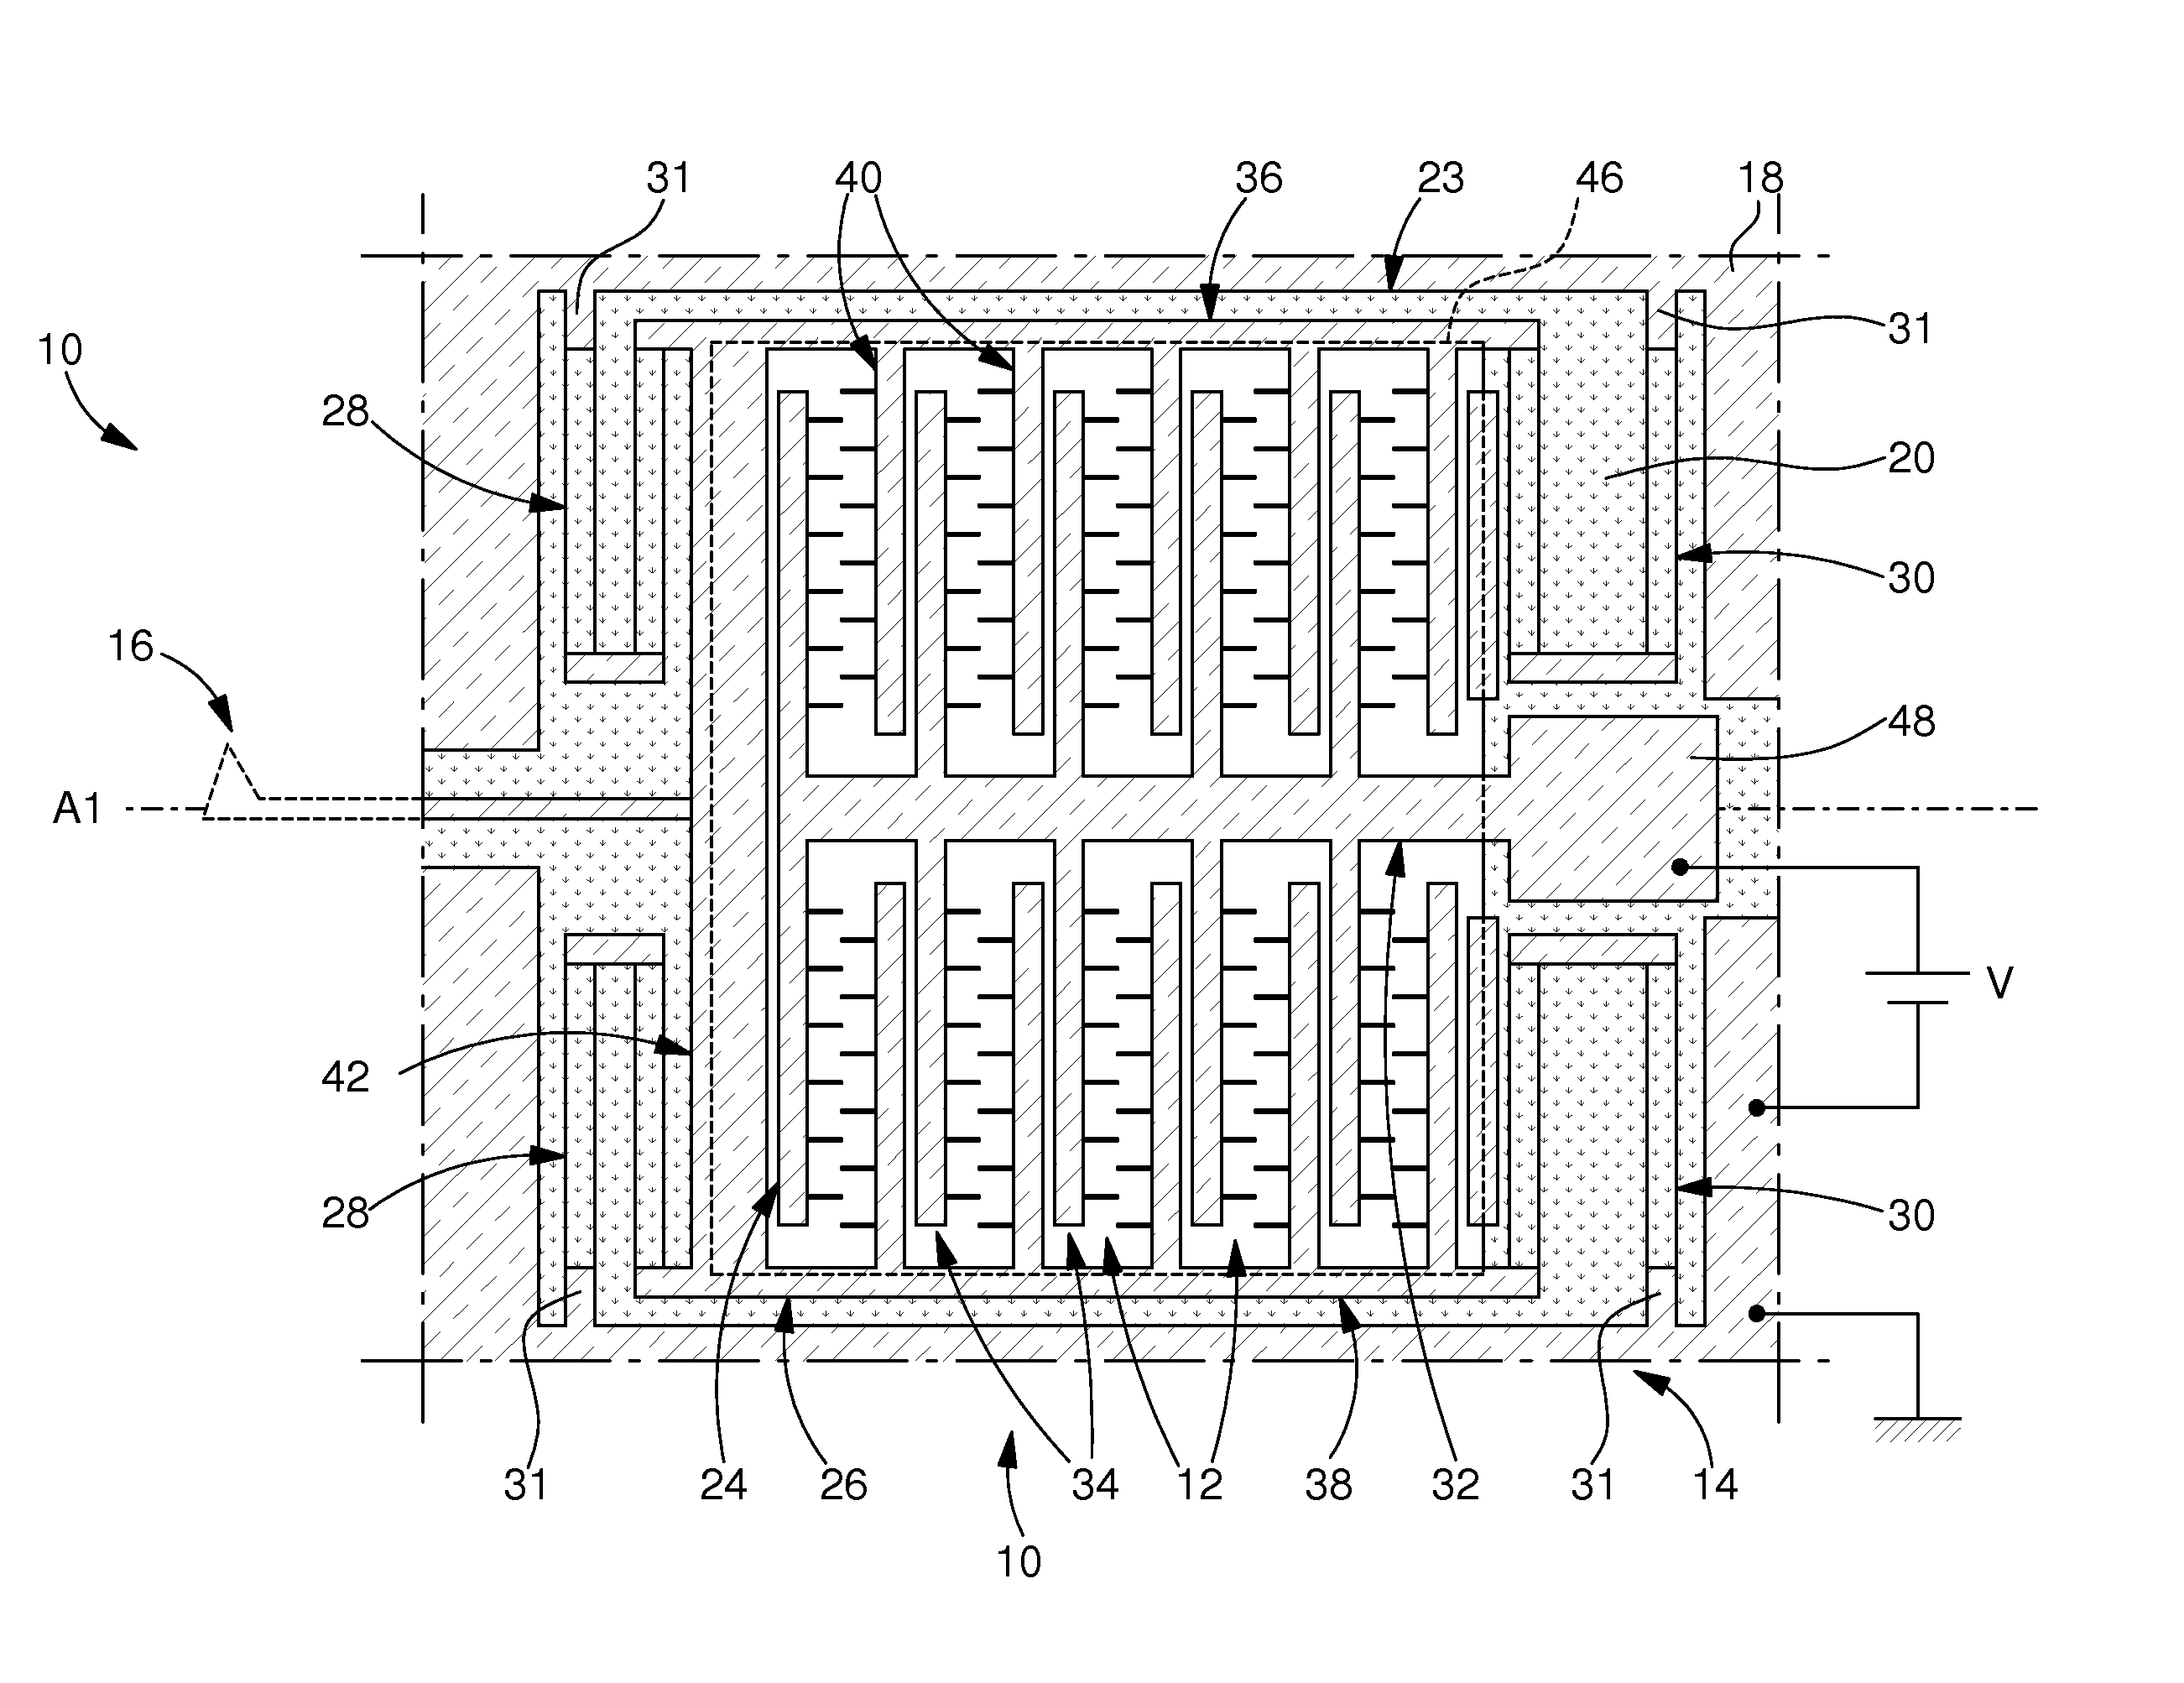 Electrostatic motor including an actuator